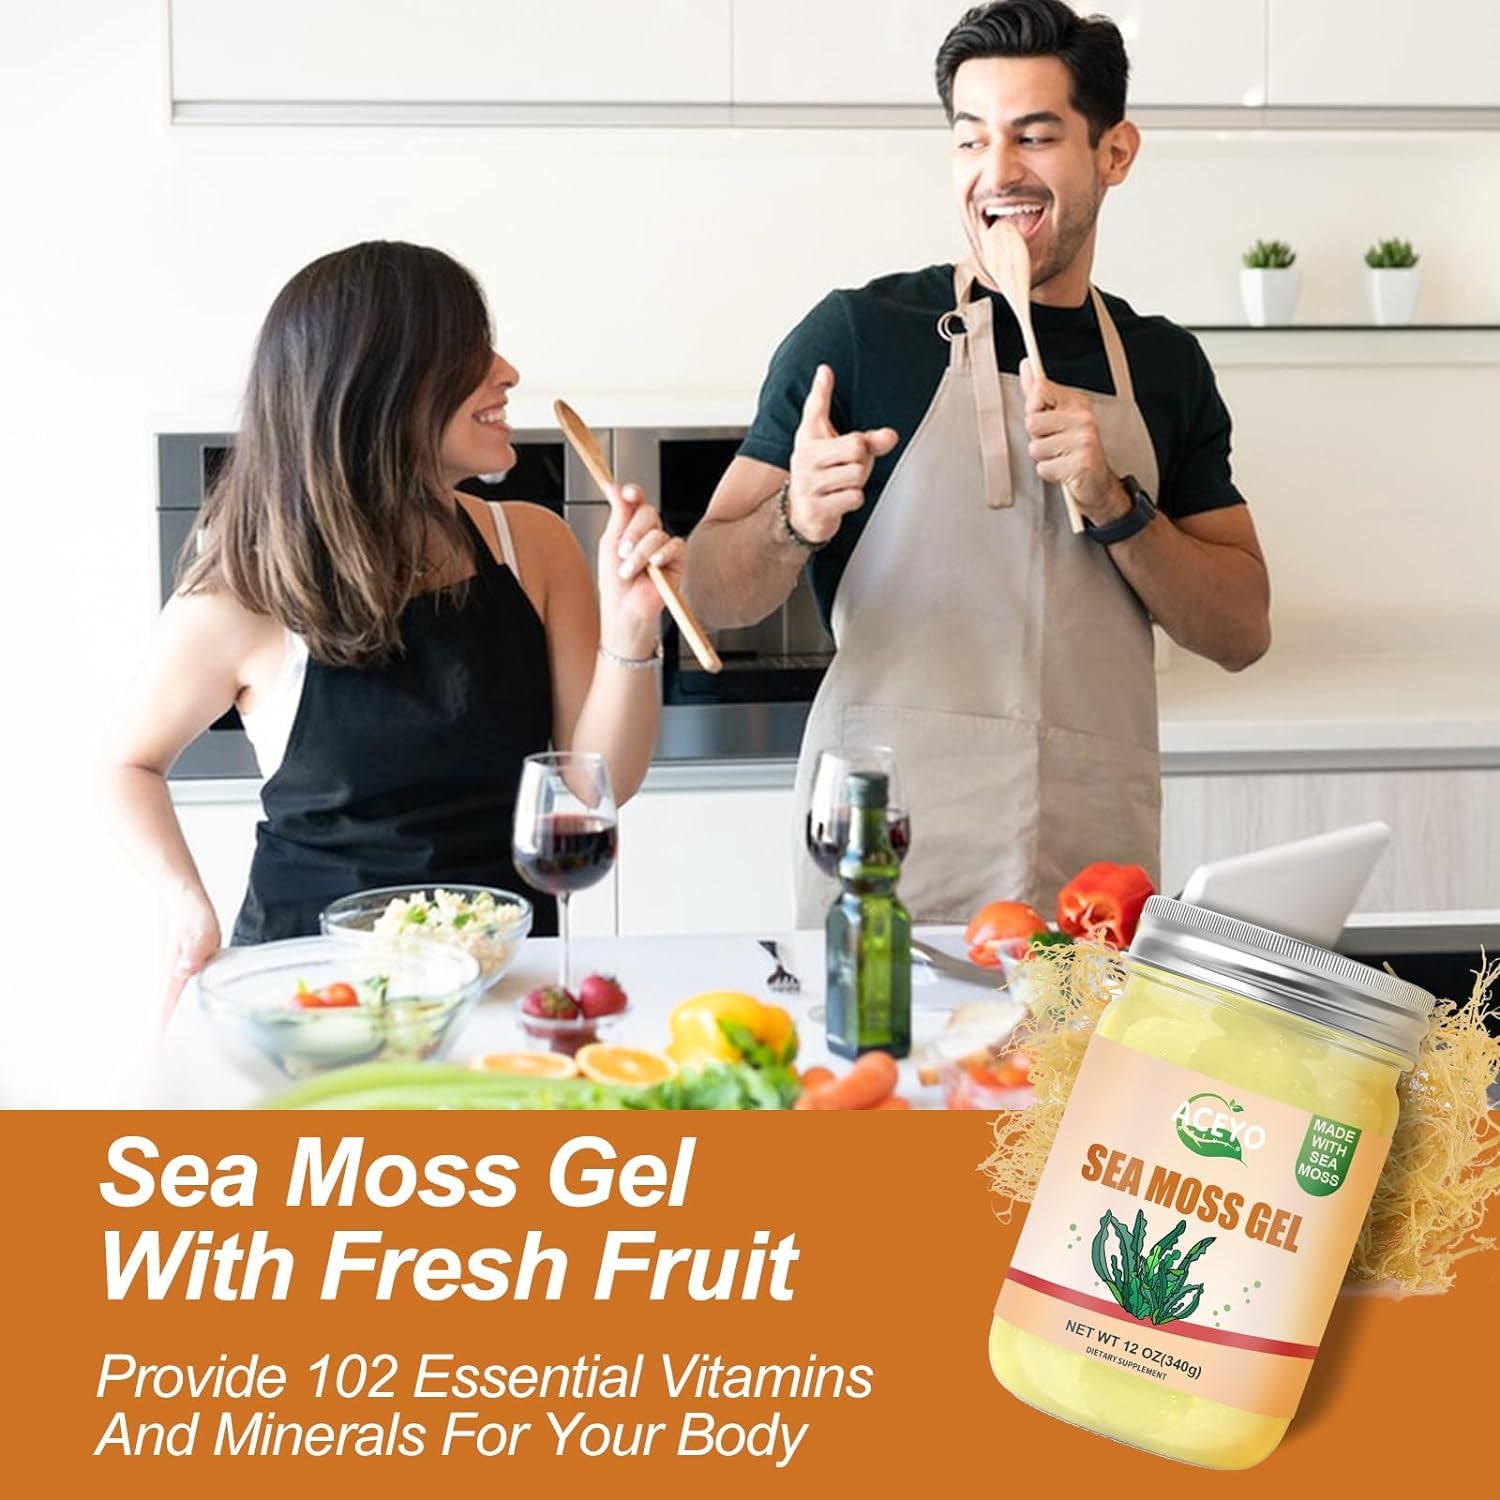 (12 OZ Organic Sea Moss Gel Raw Vegan Natural Irish Seamoss Gel for Women Men 102 Vitamins and Minerals Wild Harvested Original Flavored Non-Gmo